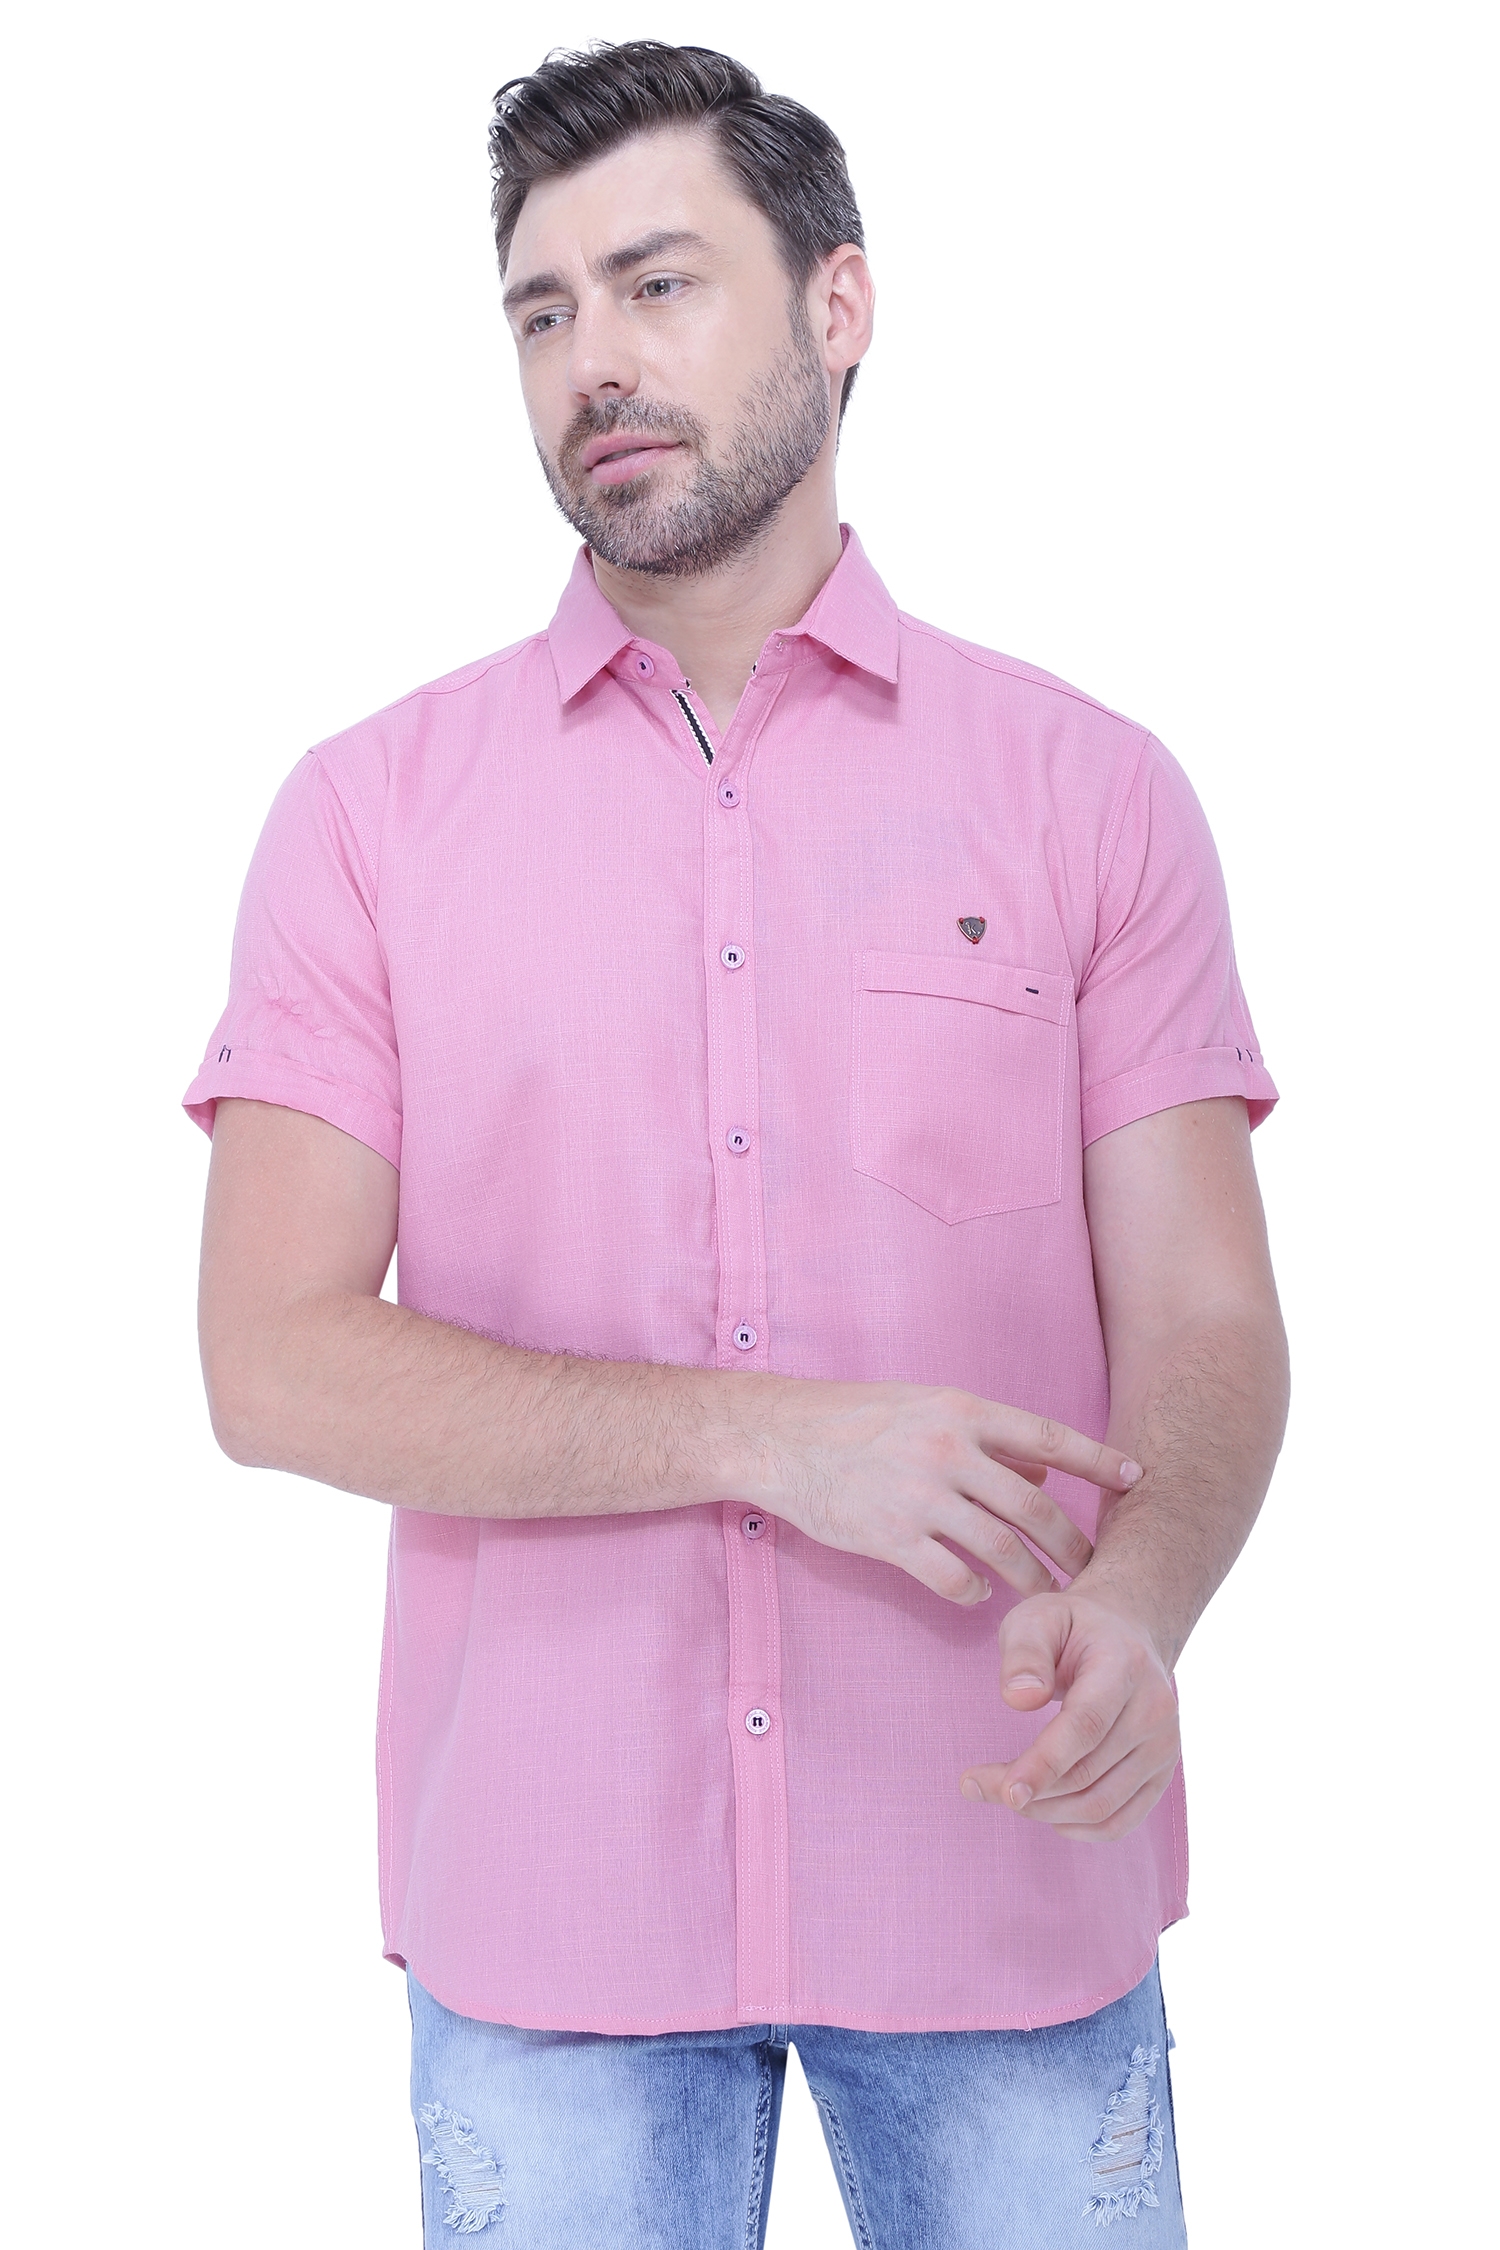 Kuons Avenue | Kuons Avenue Men's Linen Blend Half Sleeves Casual Shirt-KACLHS1232 0